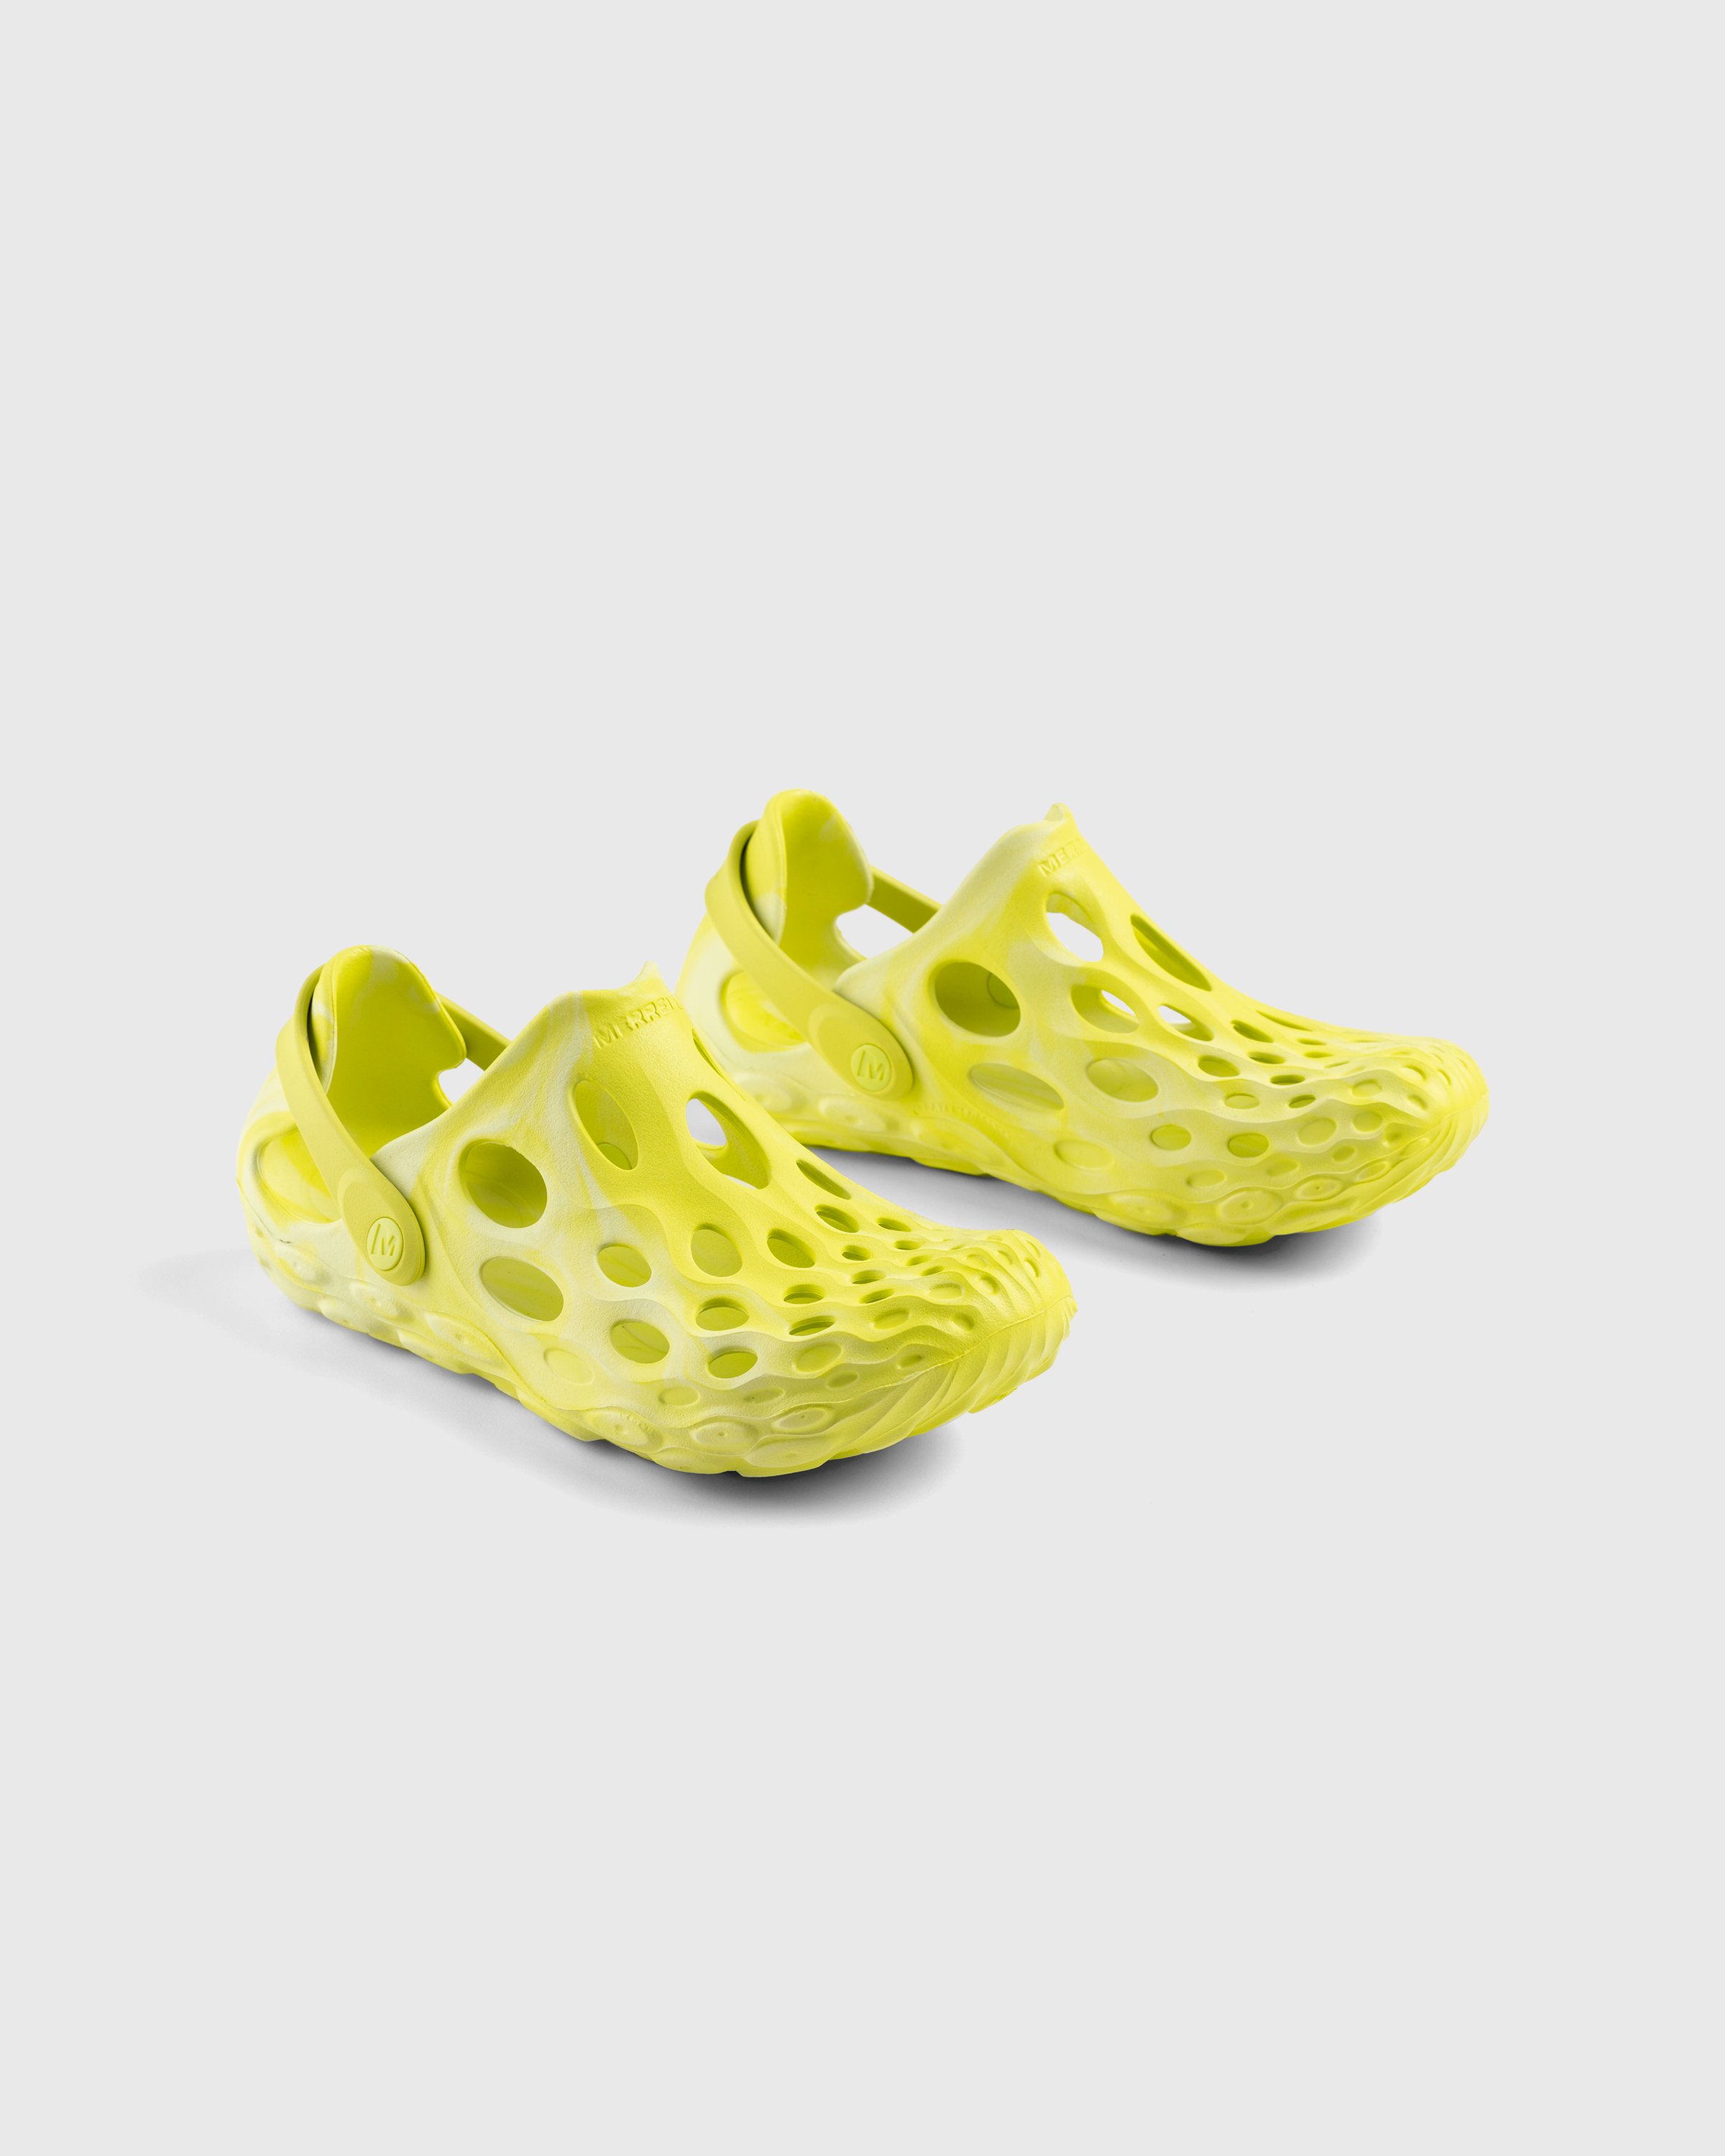 Merrell - Hydro Moc Pomelo - Footwear - Yellow - Image 3